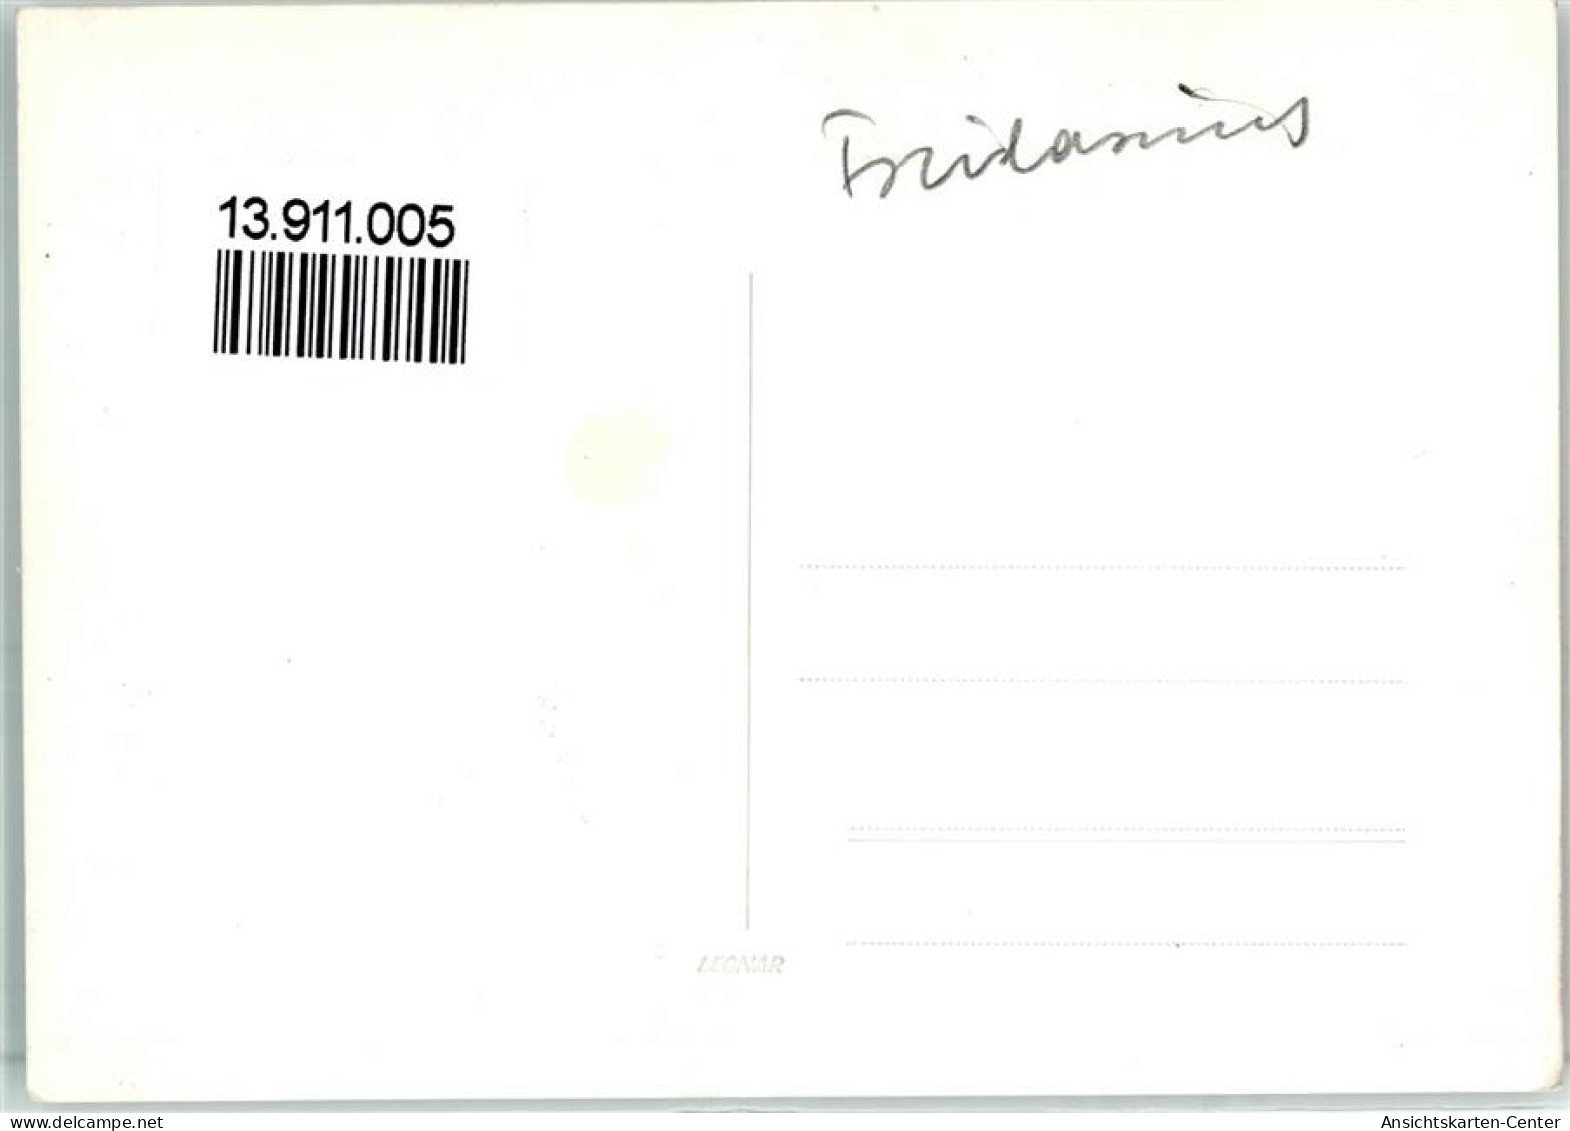 13911005 - Freilassing - Freilassing